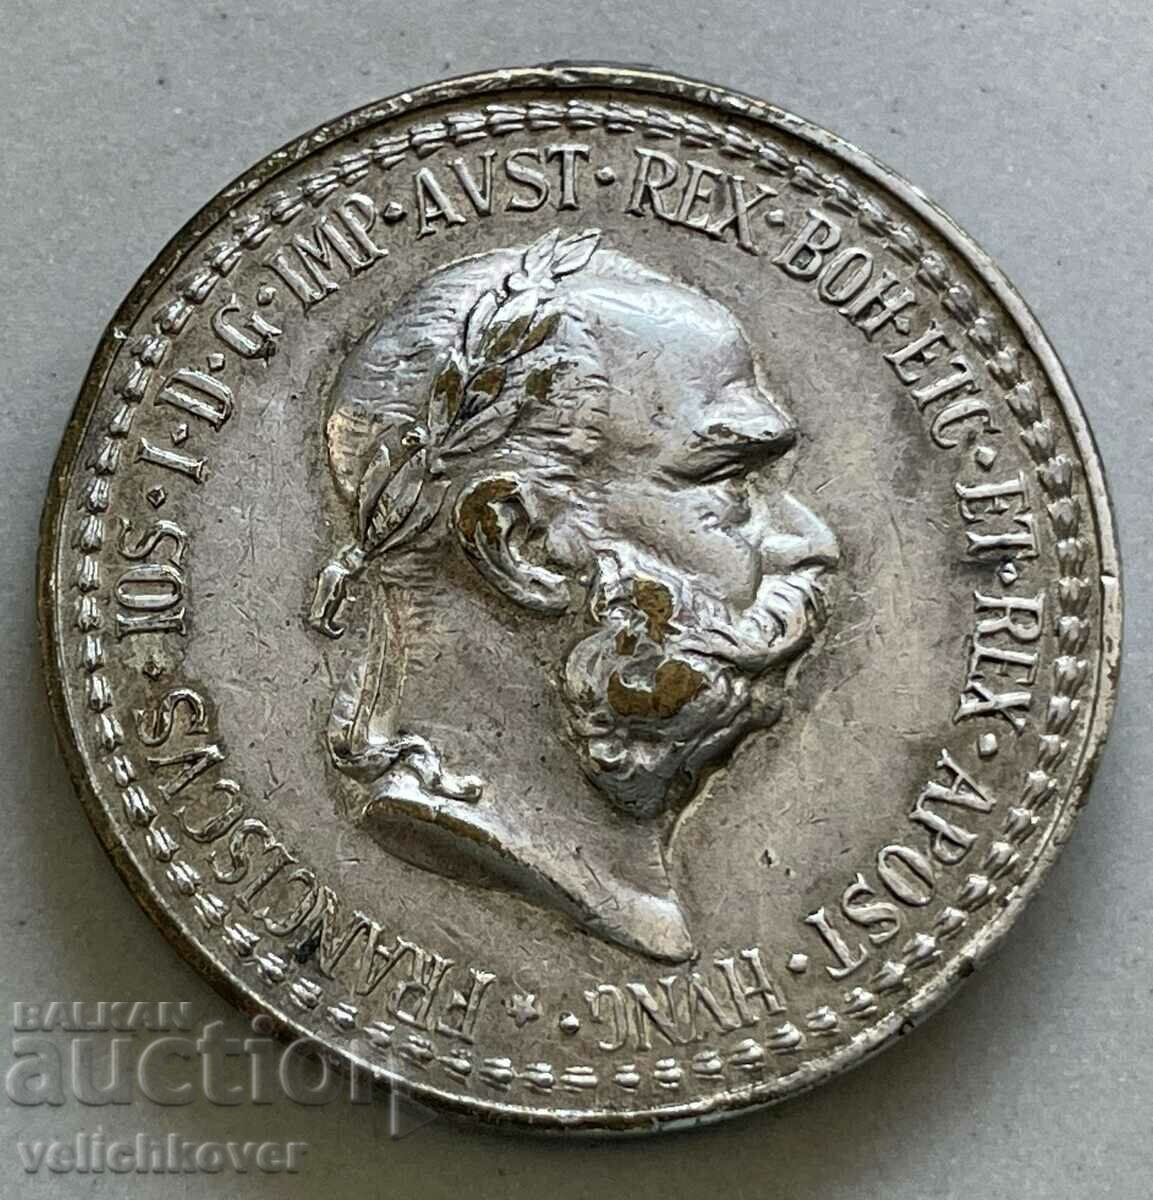 32632 Austro-Hungarian Medal Emperor Franz Joseph